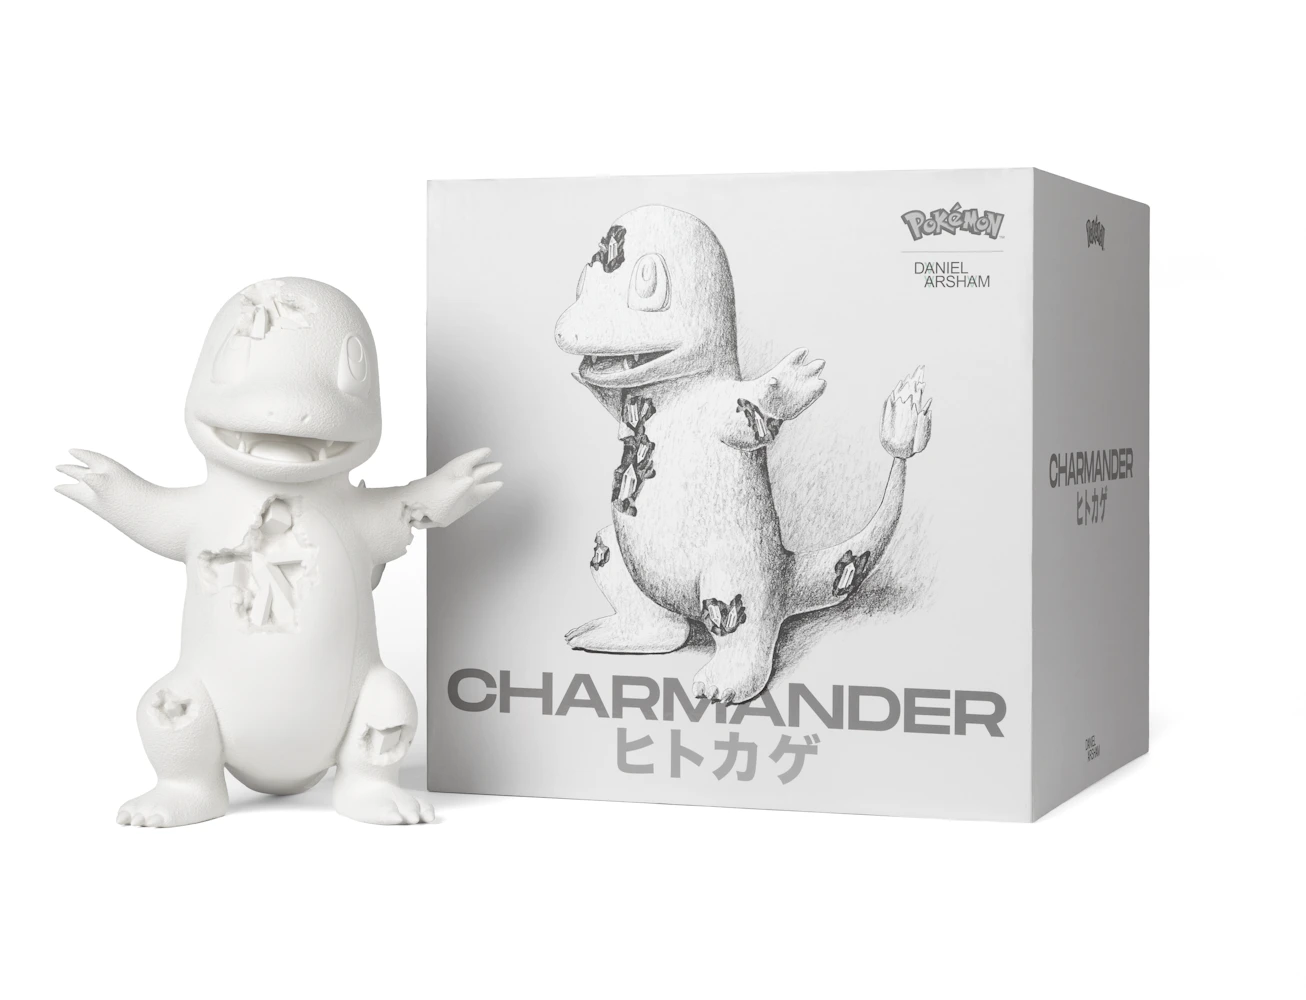 Daniel Arsham x Pokemon Crystalized Charmander Figure (Edition 